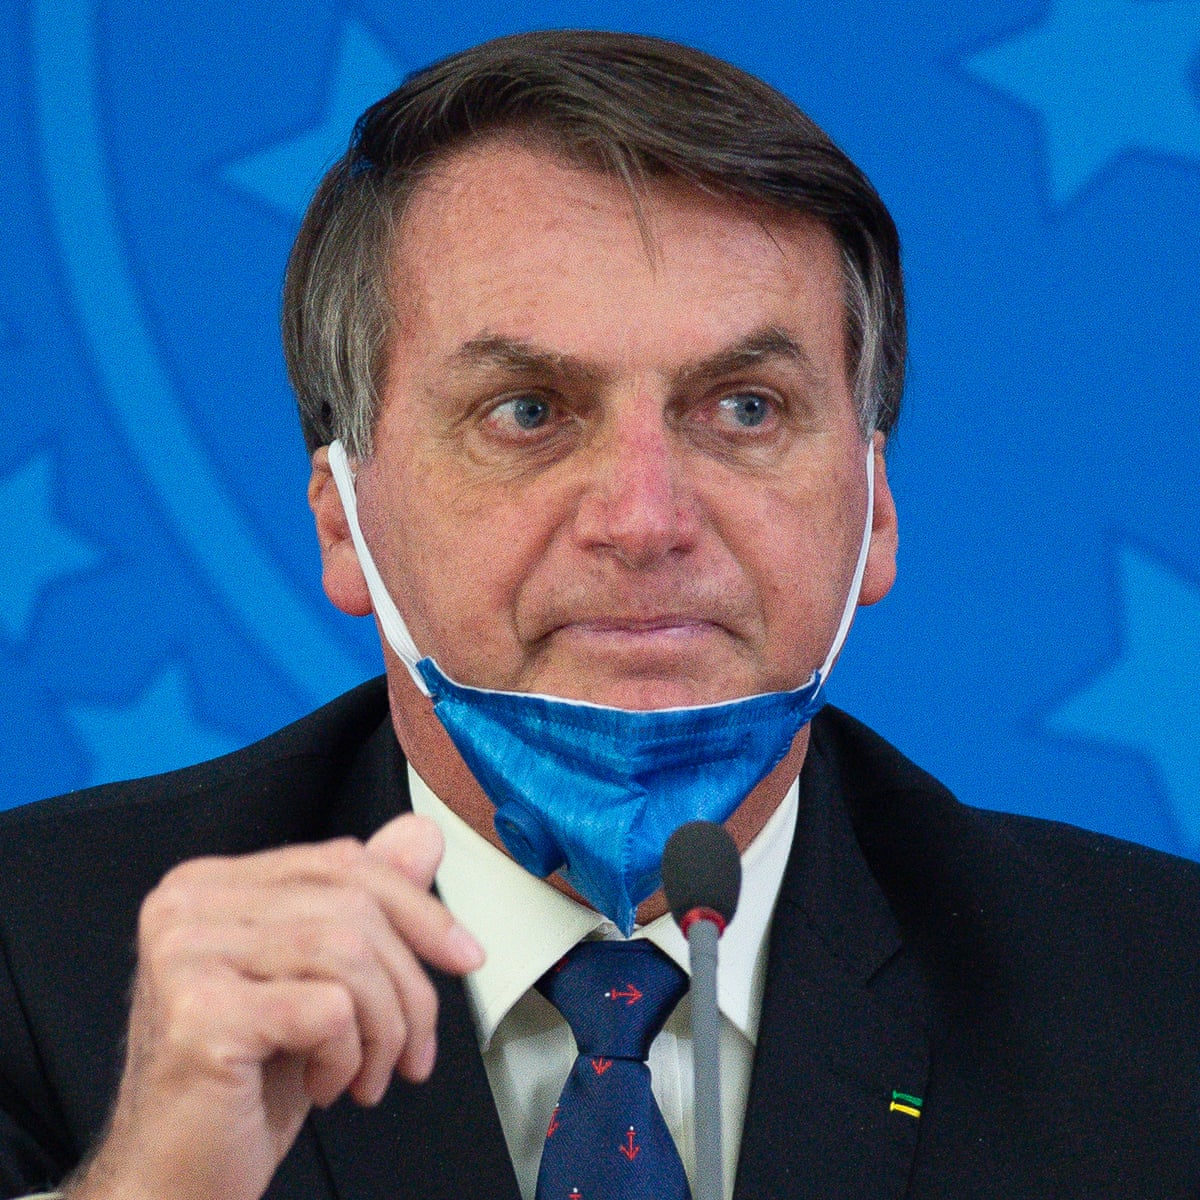 Brazil S Jair Bolsonaro Says Coronavirus Crisis Is A Media Trick